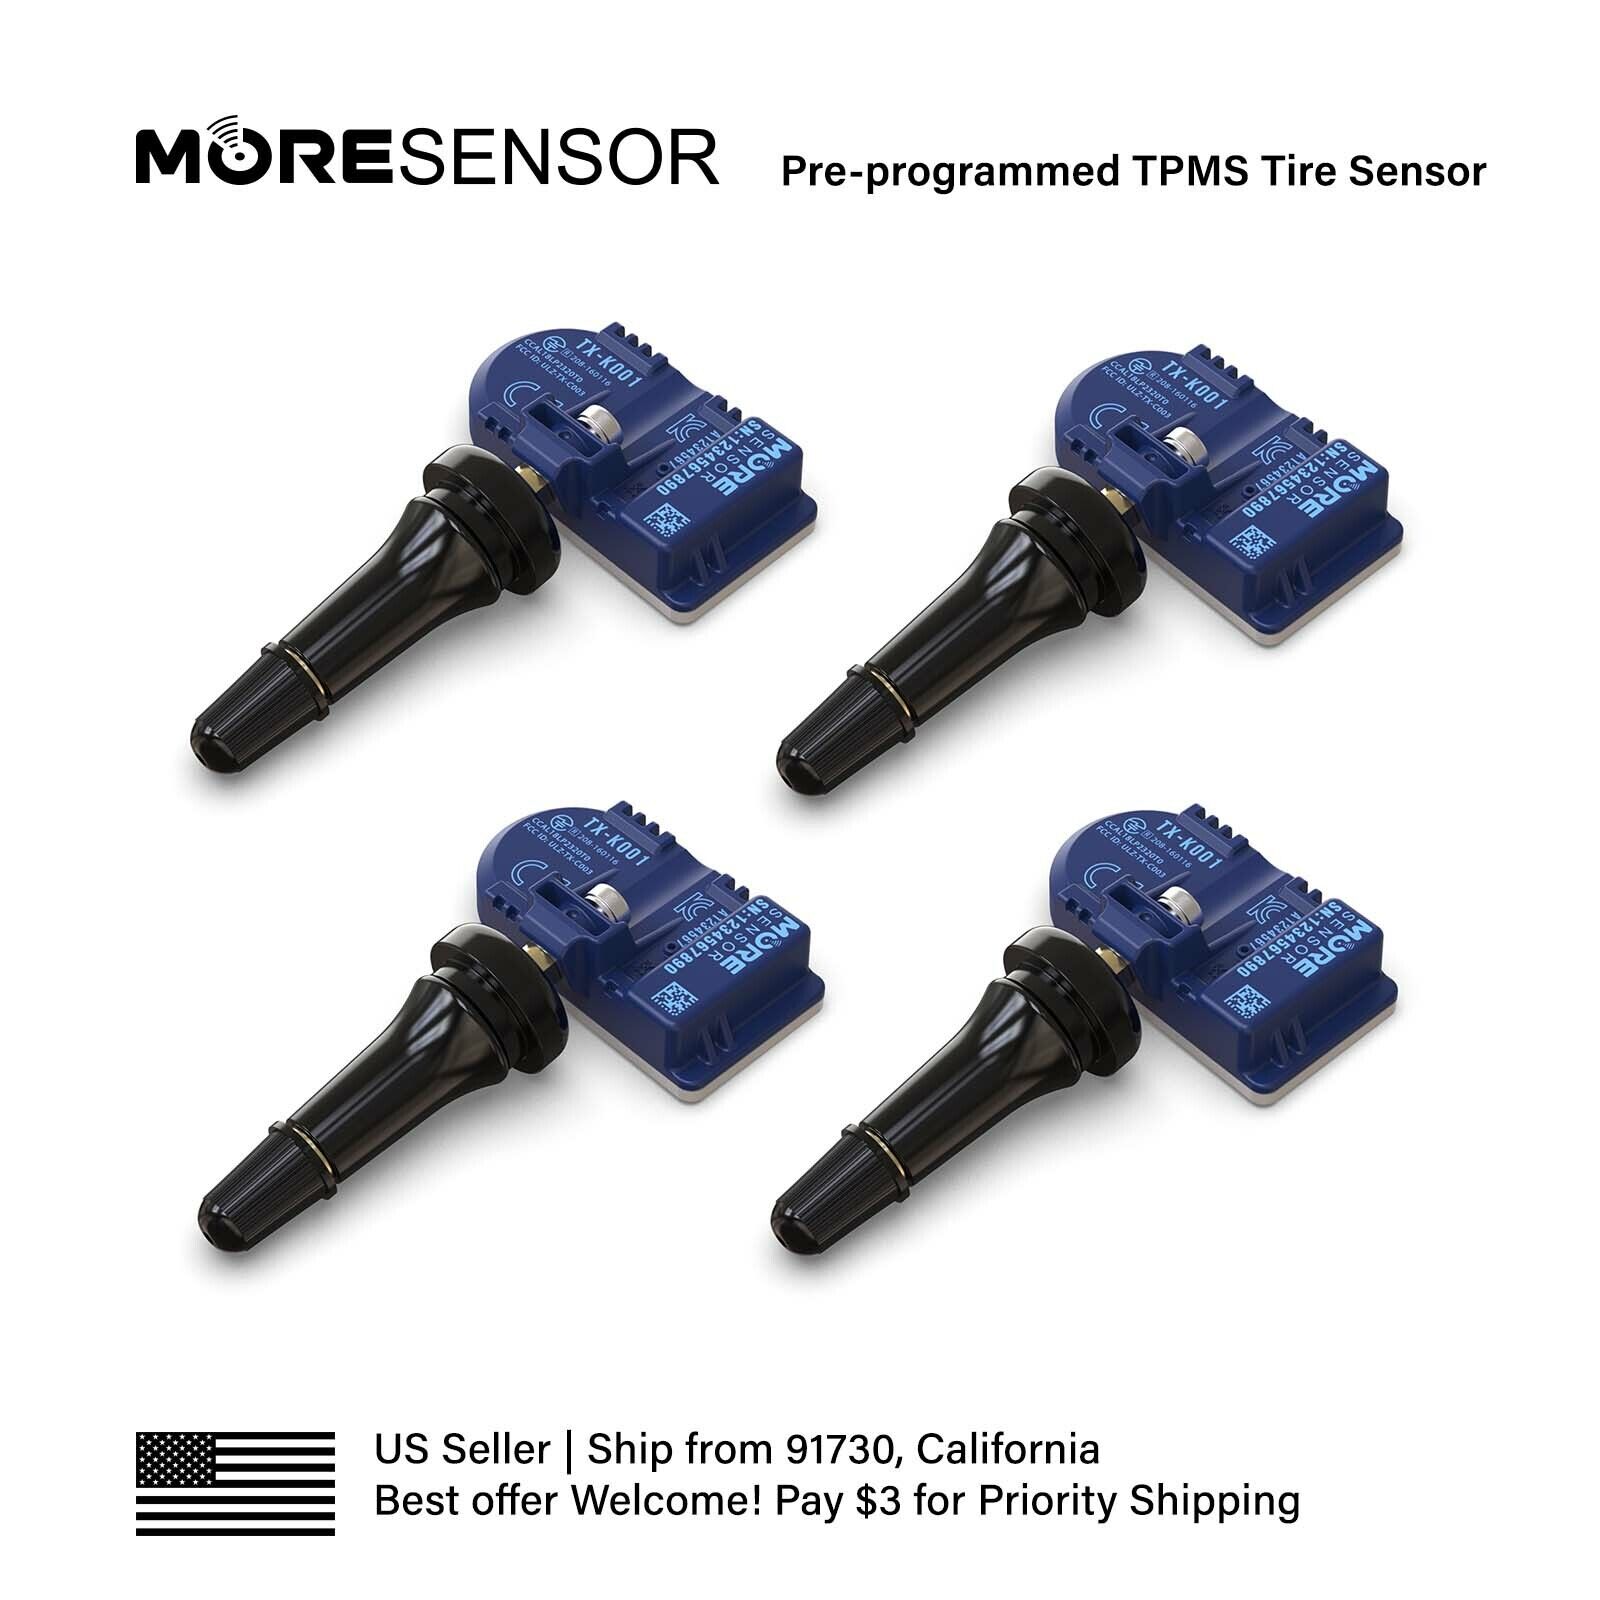 4PC 433MHz MORESENSOR TPMS Snap-in Tire Sensor for C30 C70 V50 V60 V70 XC90 XC60